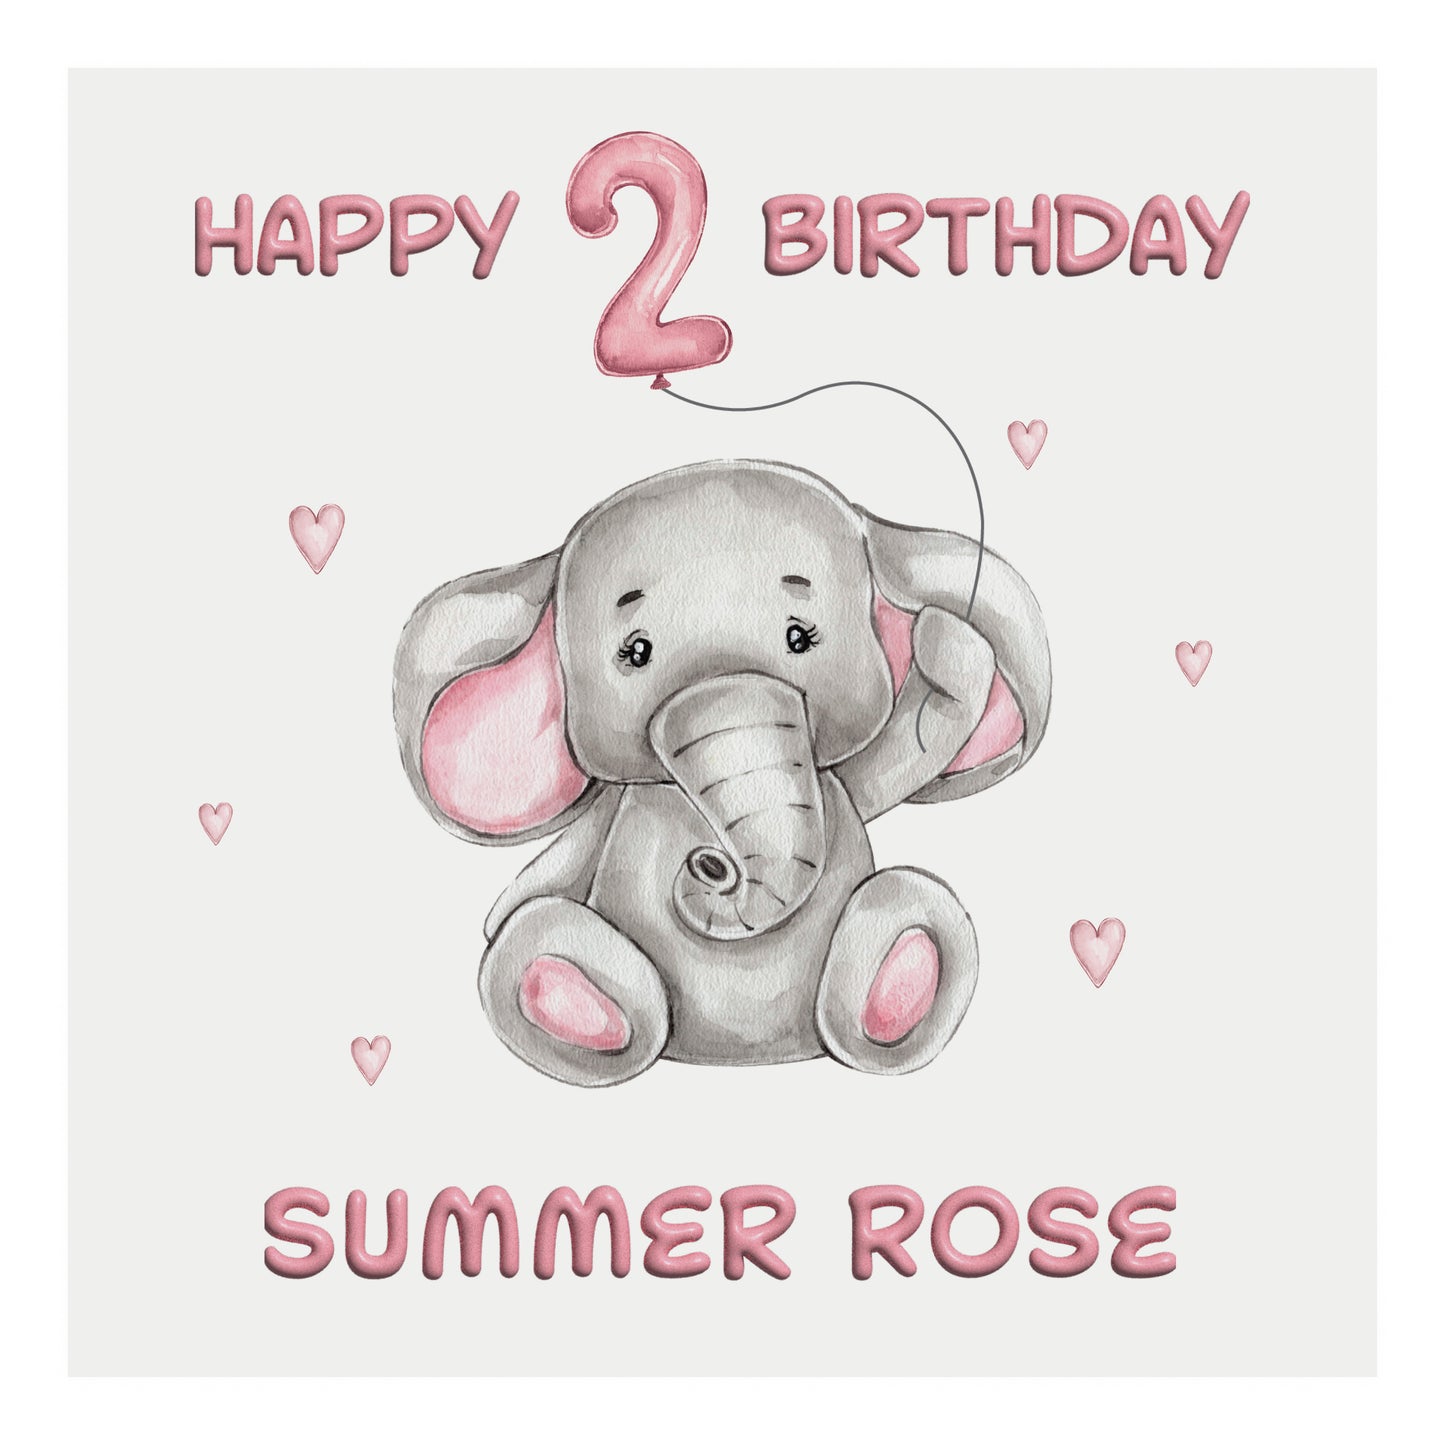 Personalised Birthday Card Balloon Animals (Elephant)